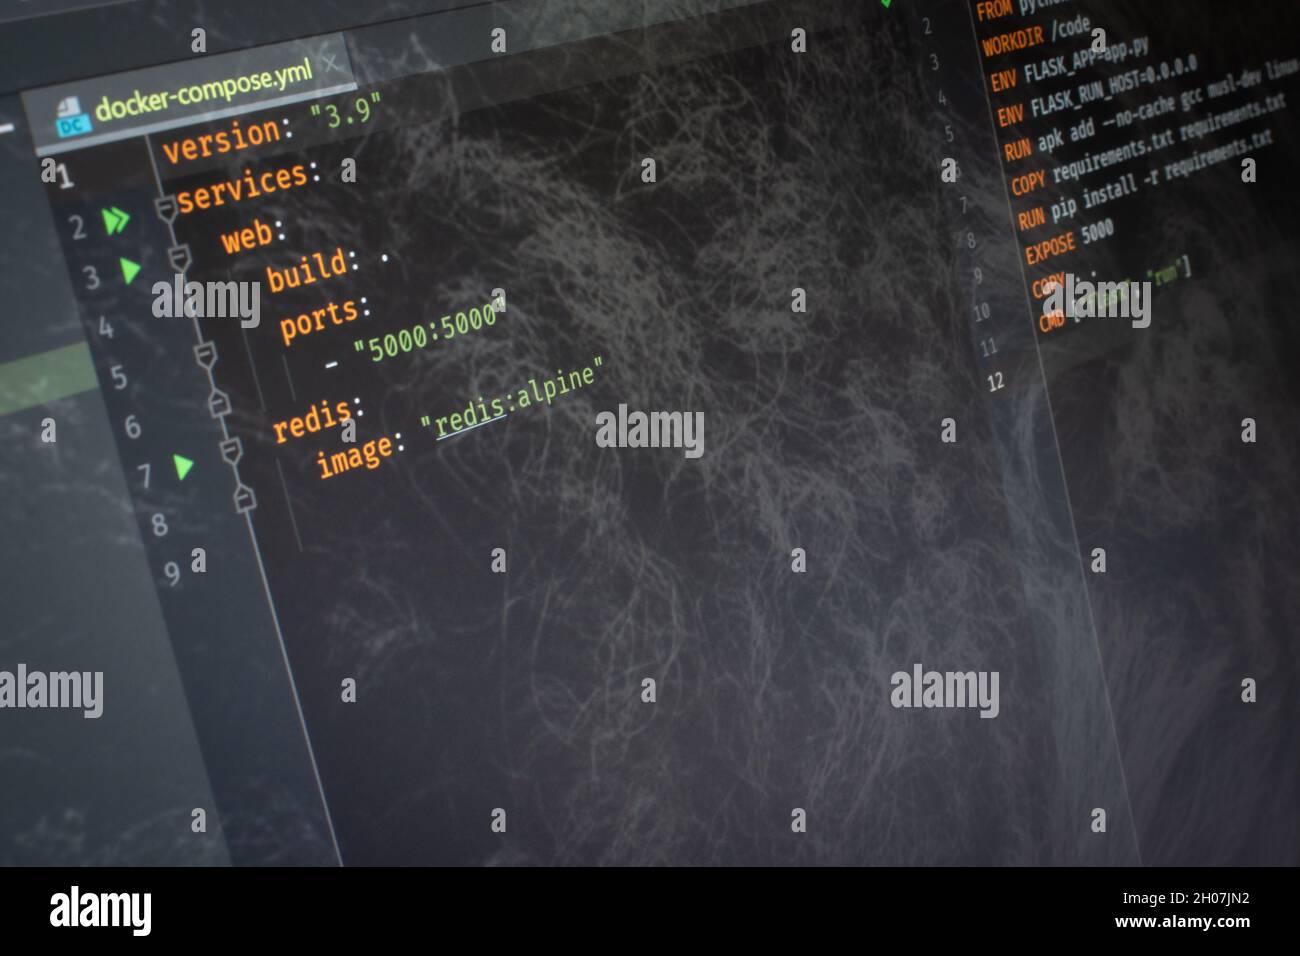 Docker compose Hello World code on screen Stock Photo